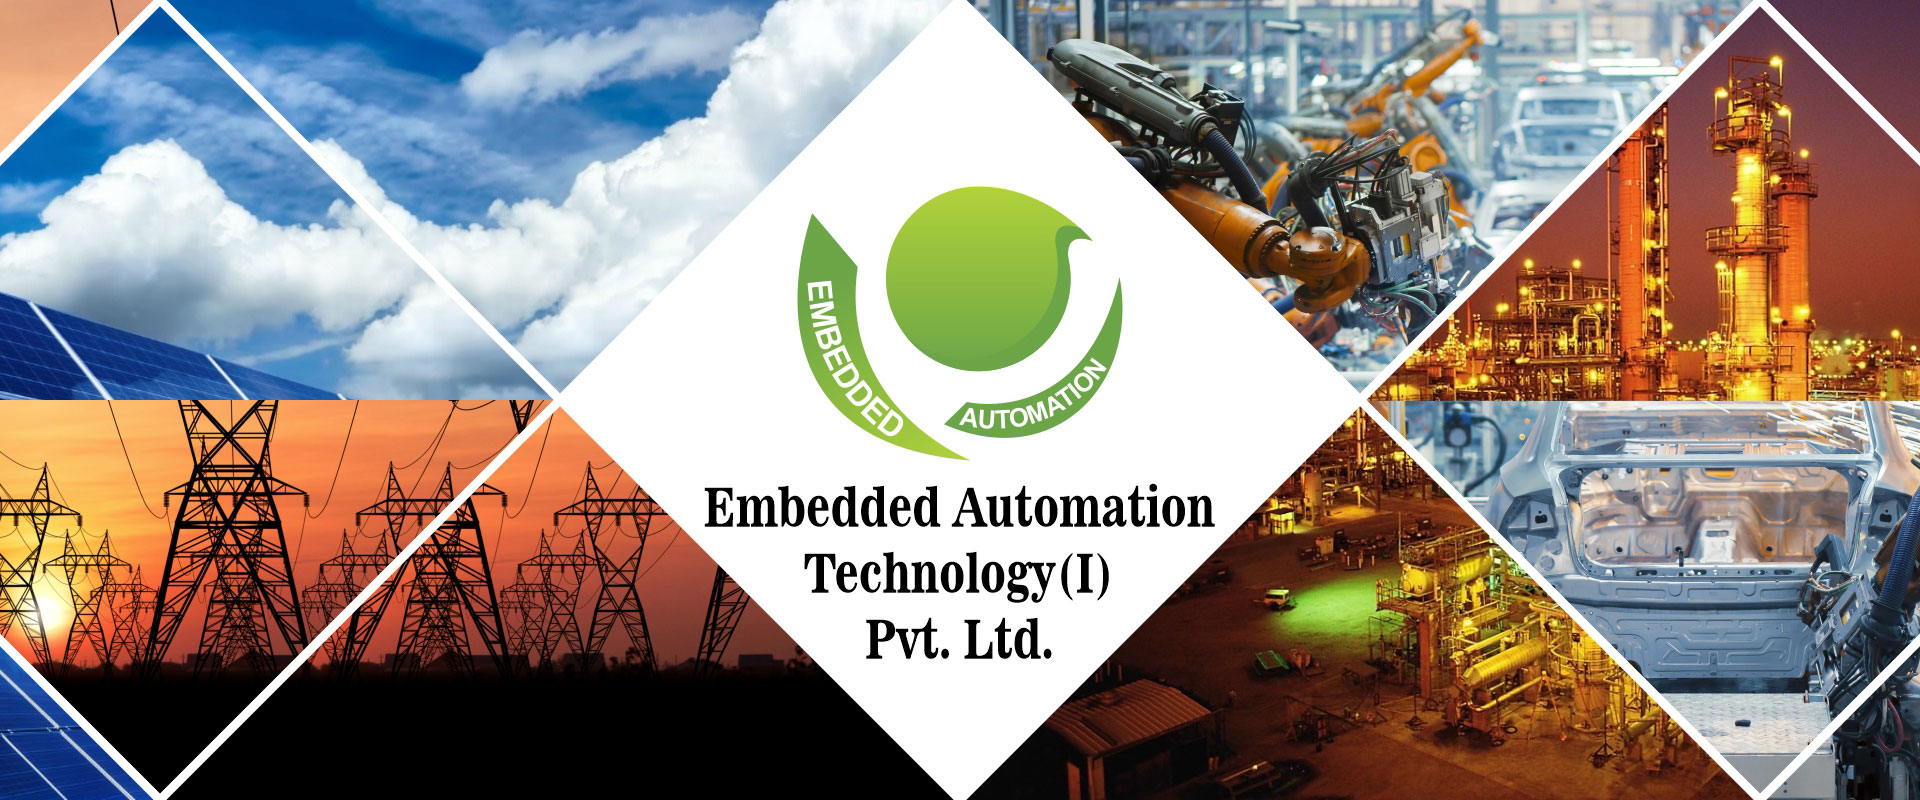 Embedded Automation Technology (I) Pvt.Ltd.